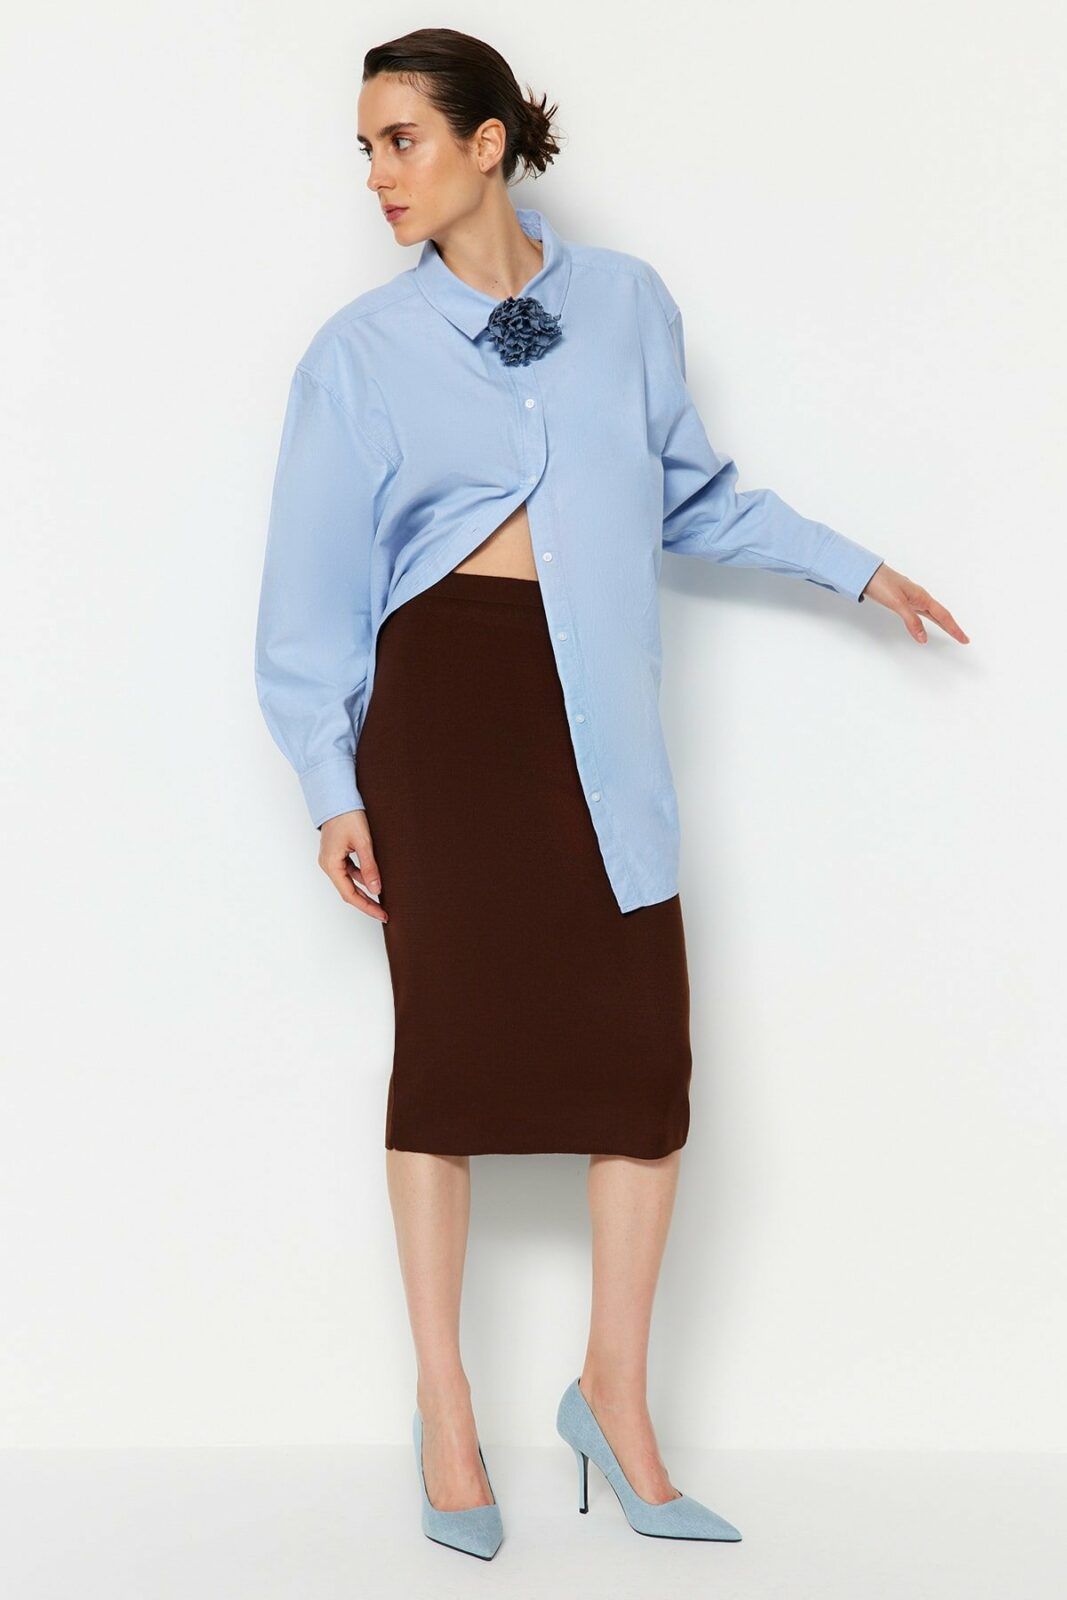 Trendyol Skirt - Brown